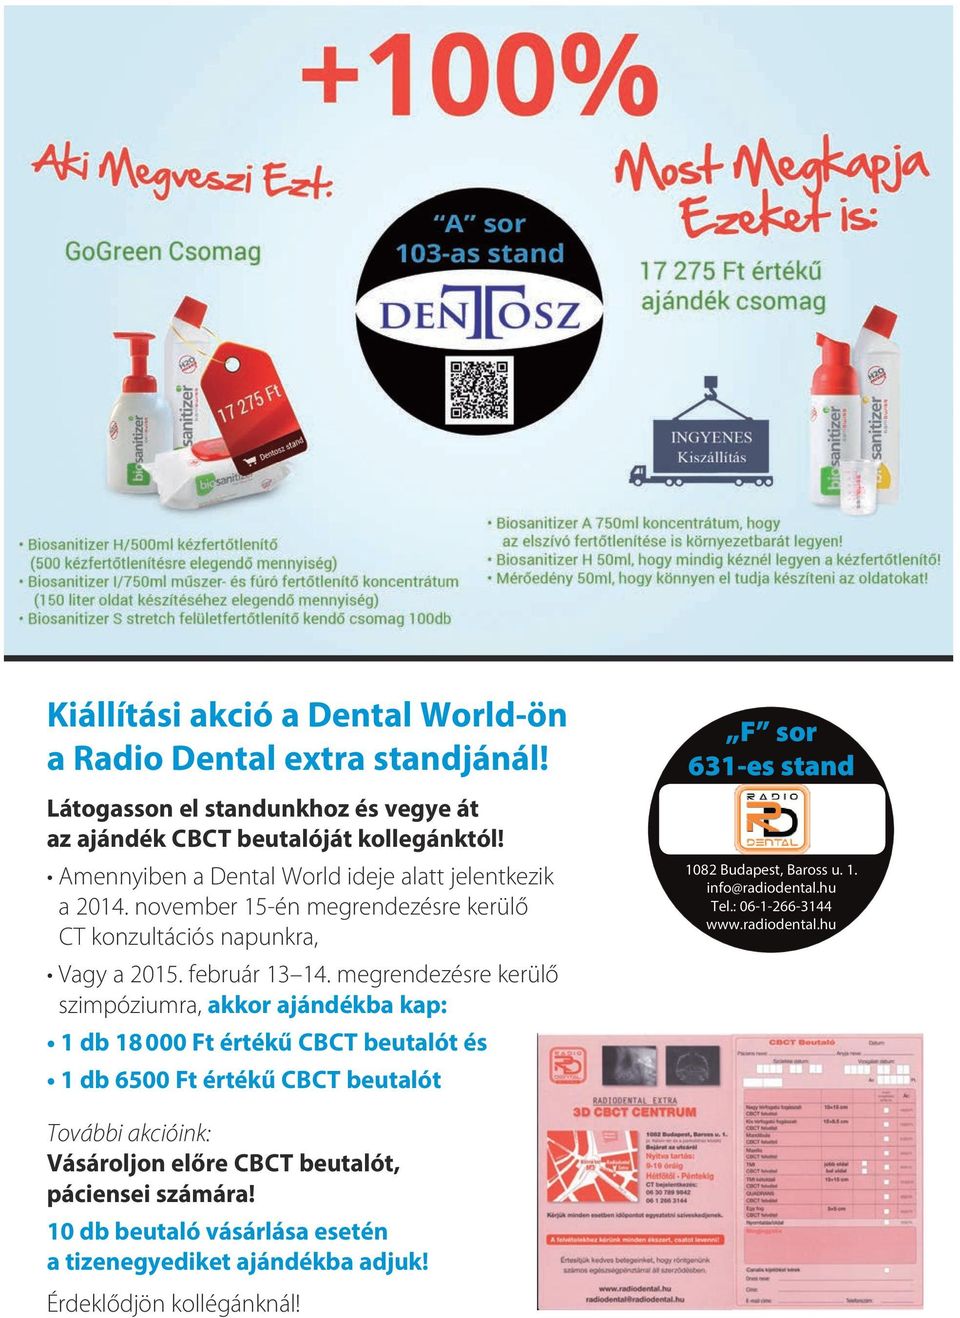 Dental World Budapest Hungary Október kuponfüzet - PDF Free Download